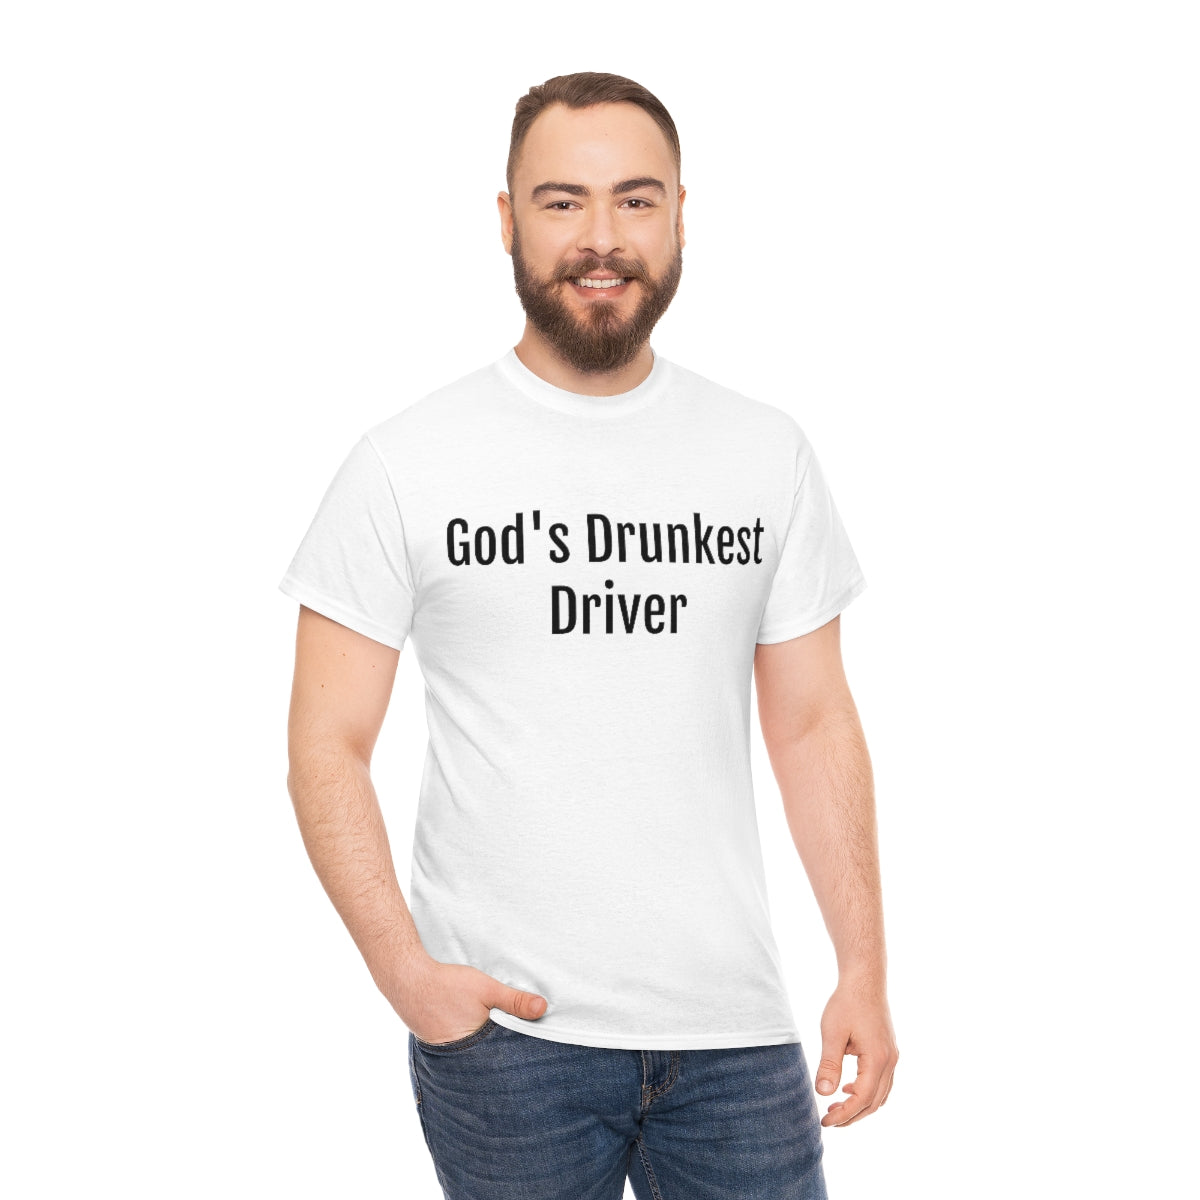 GODS DRUNKEST DRIVER T-SHIRT